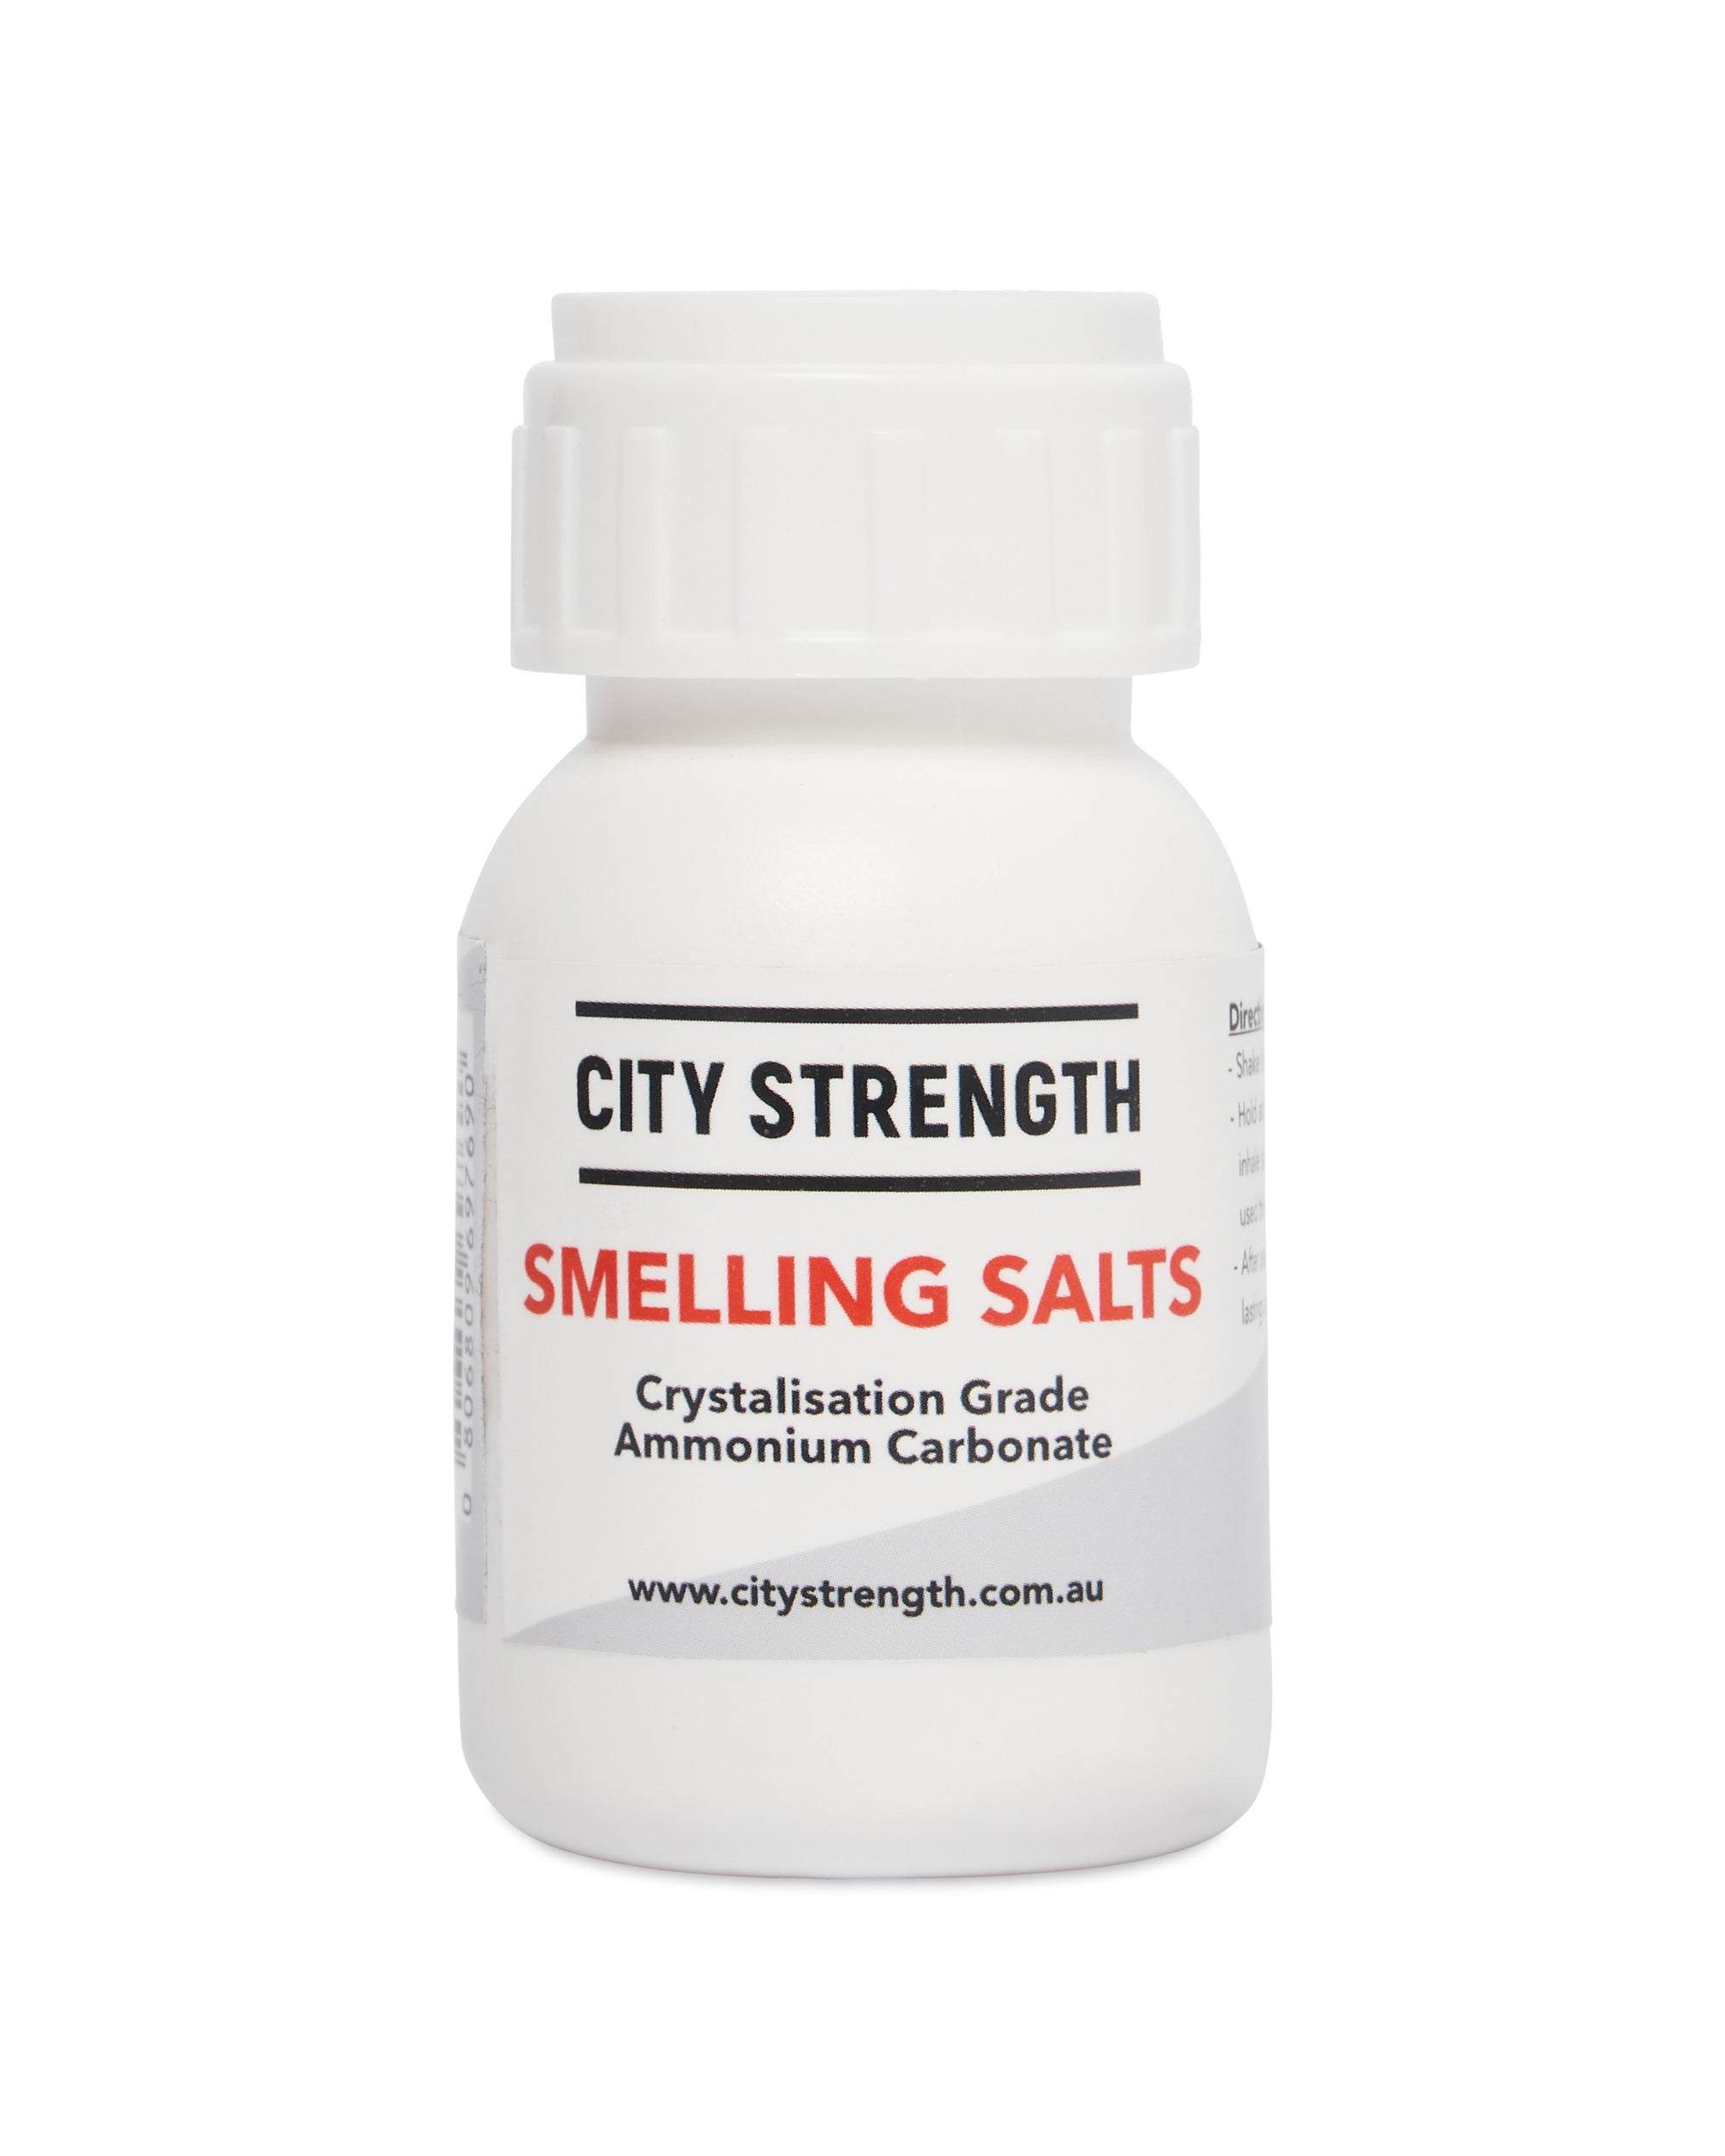 Strength Salts — Strength Shop